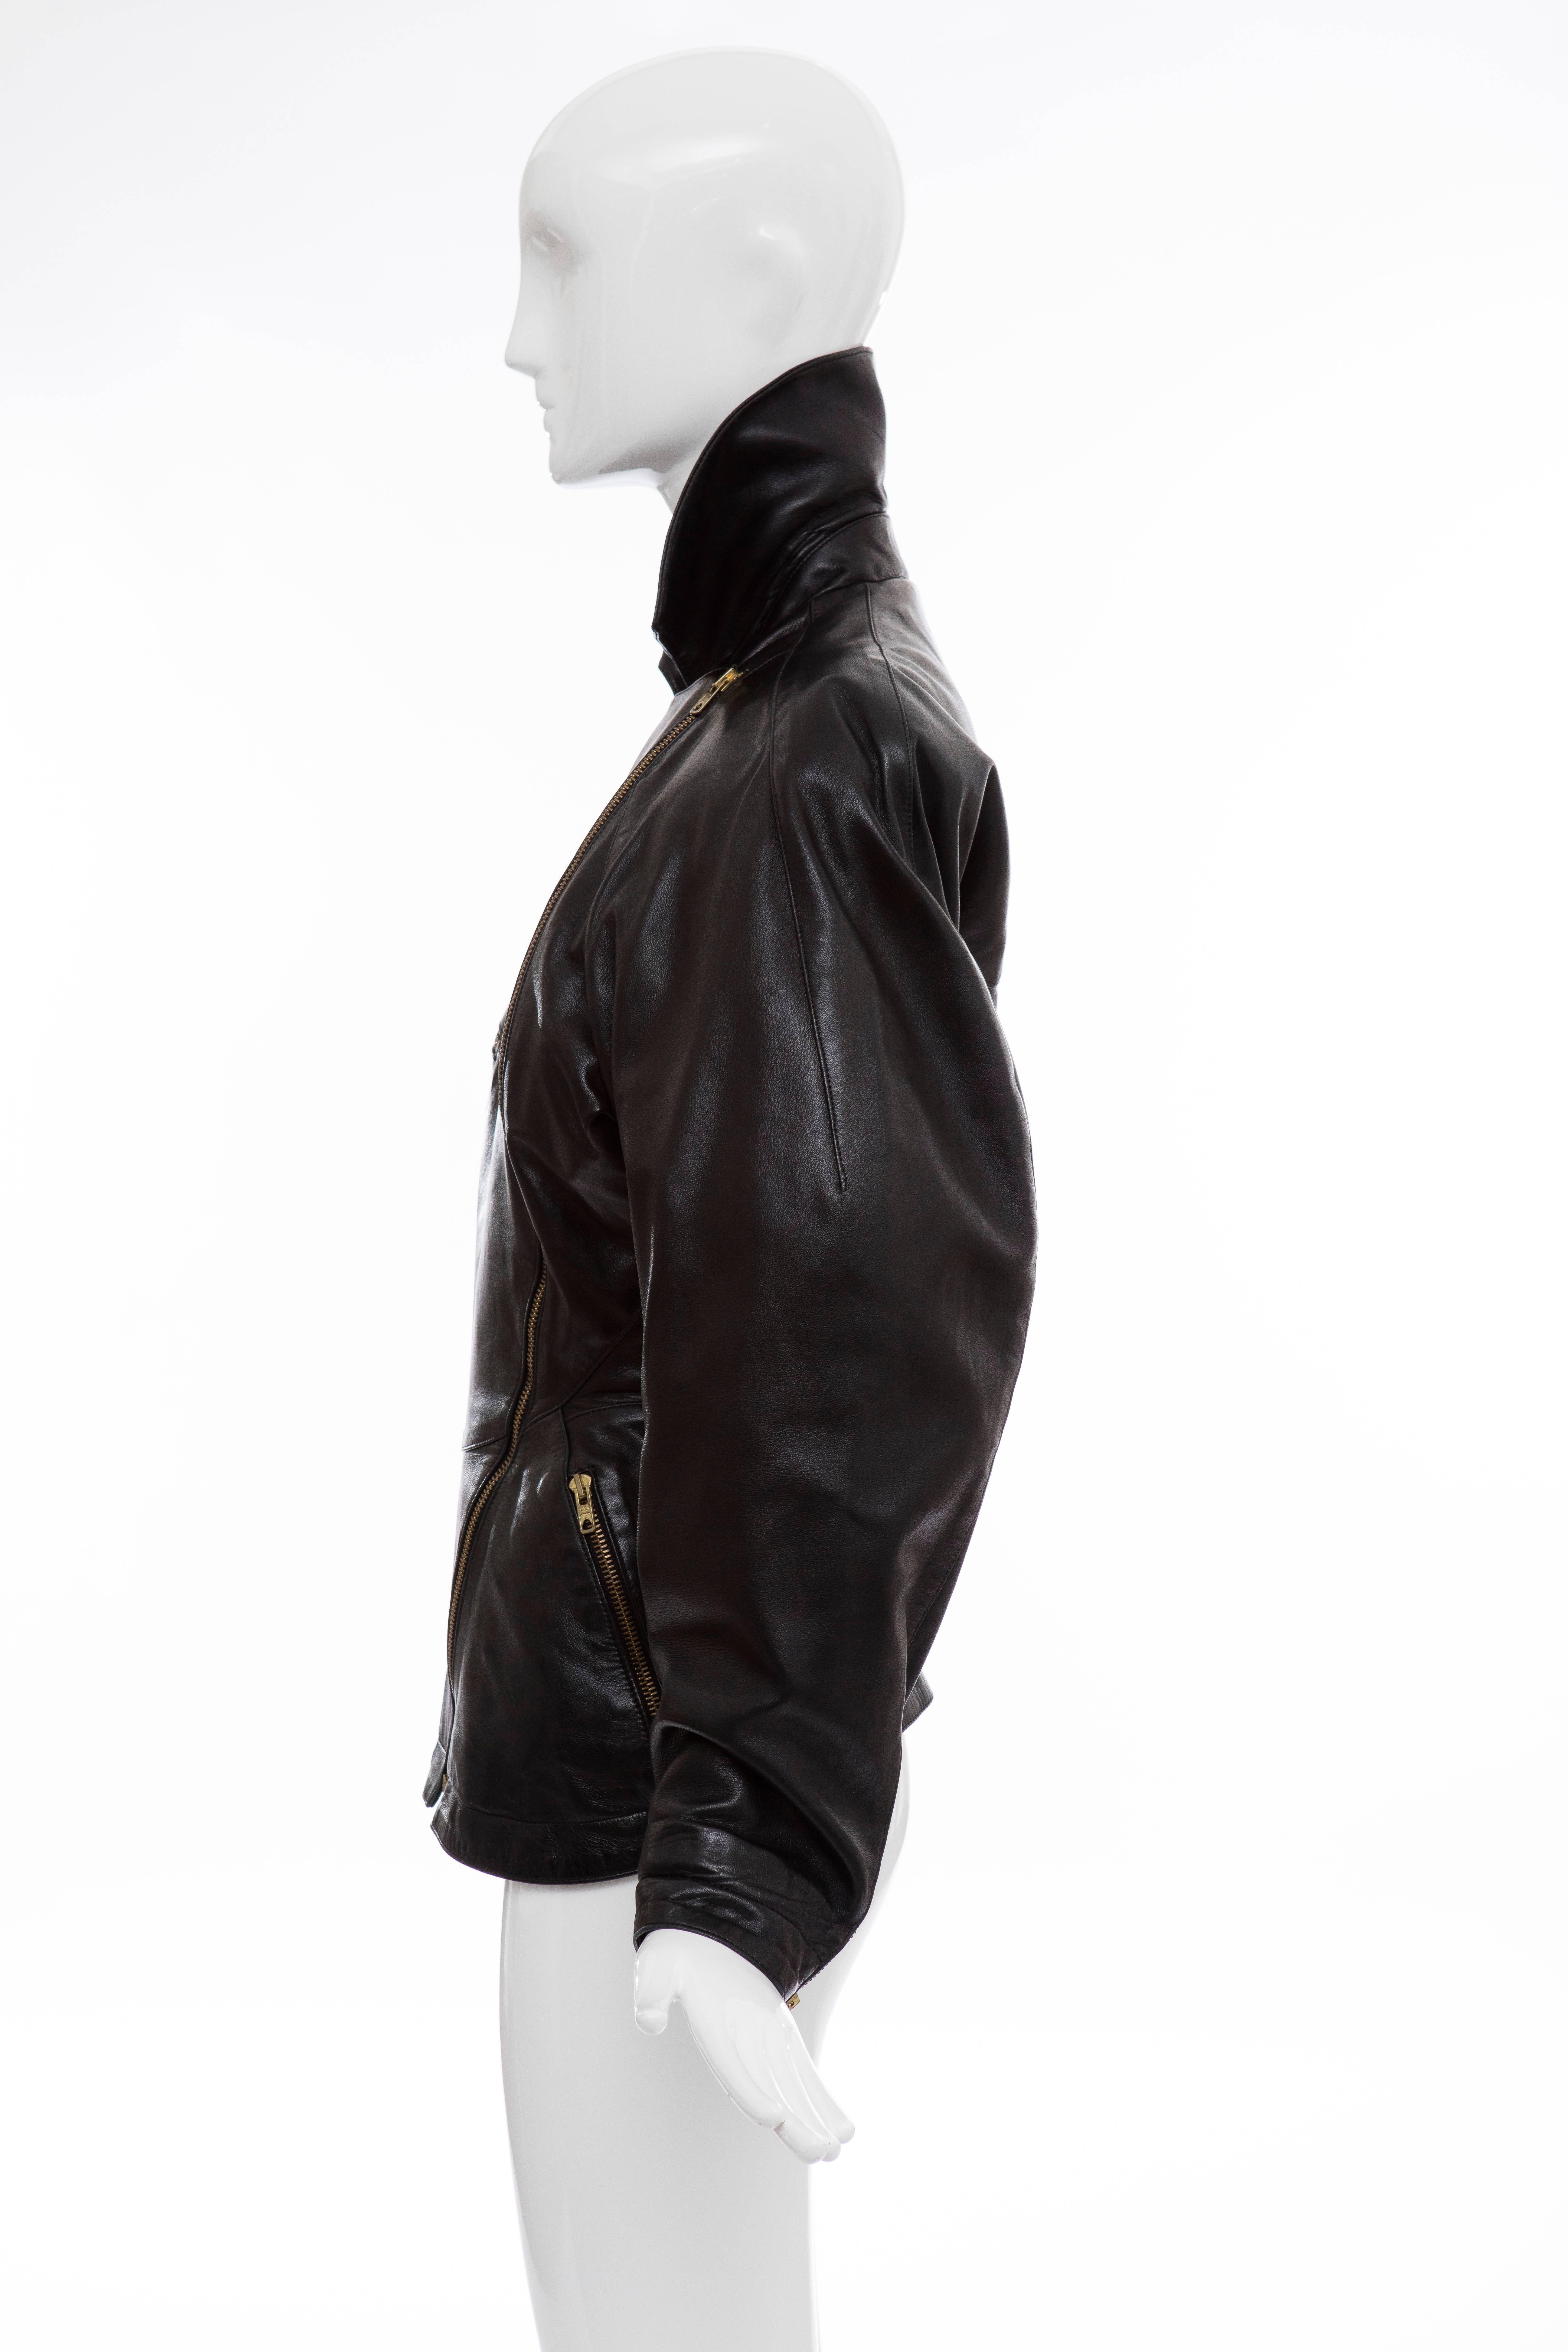 Azzedine Alai Black Zip Front Lambskin Leather Jacket , Circa 1986 For Sale 3